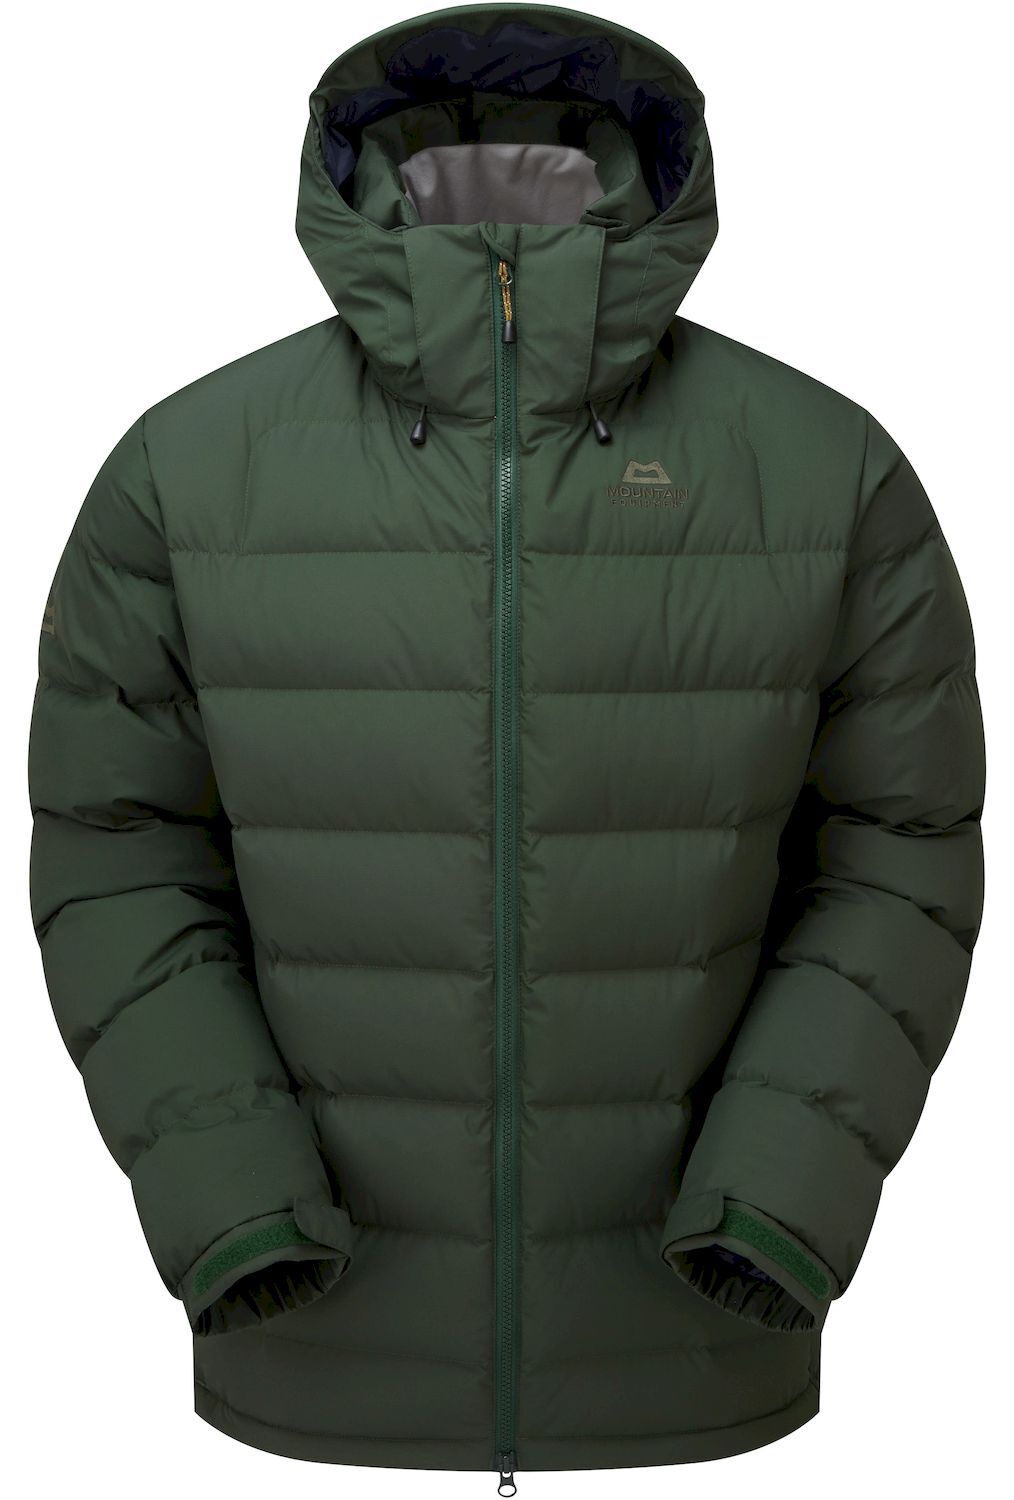 Mountain Equipment Lightline Eco Jacket - Synthetic jacket - Men's